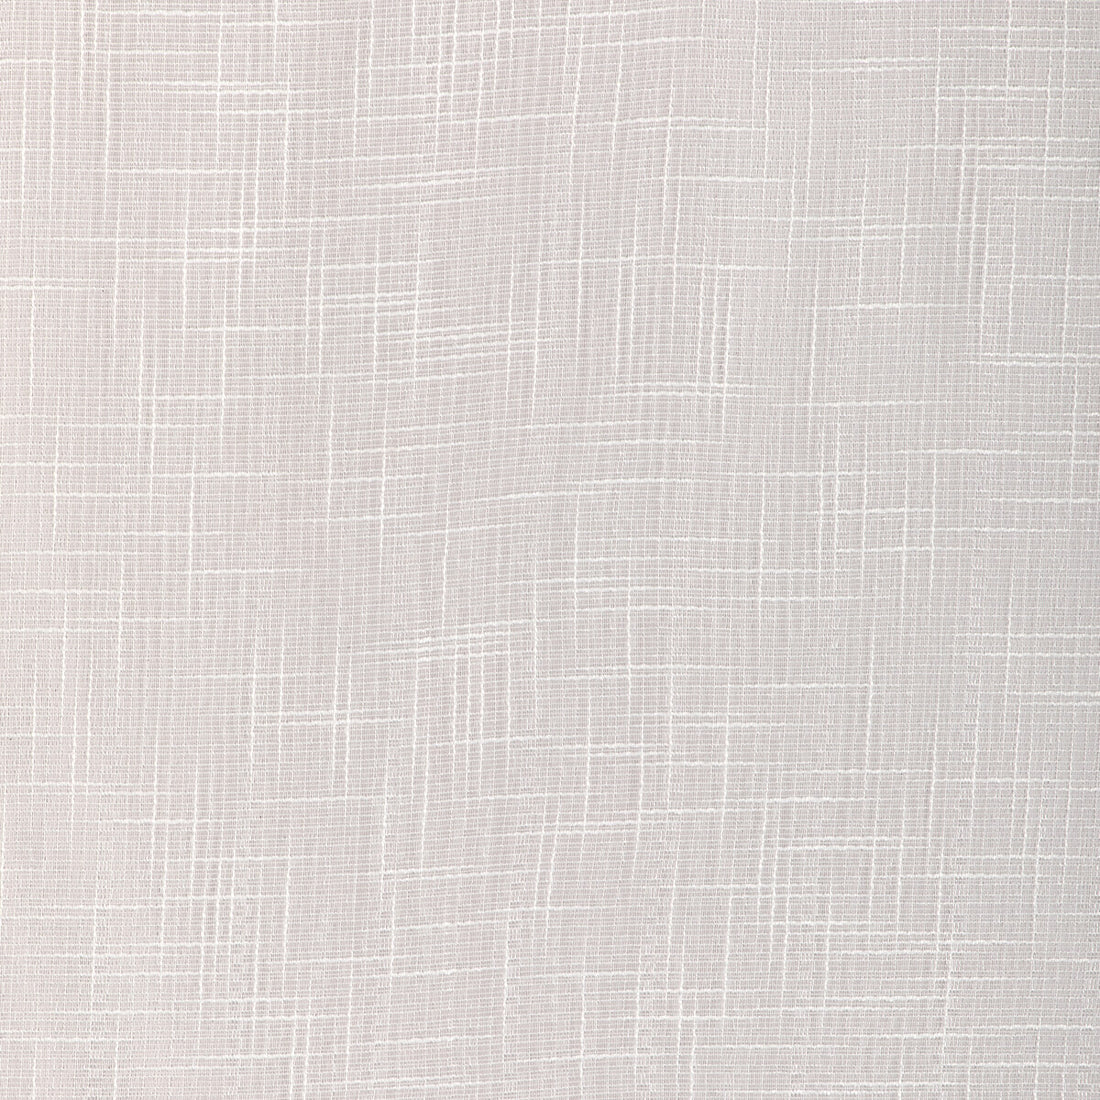 Kravet Basics fabric in 90035-1 color - pattern 90035.1.0 - by Kravet Basics in the Sheer Outlook collection